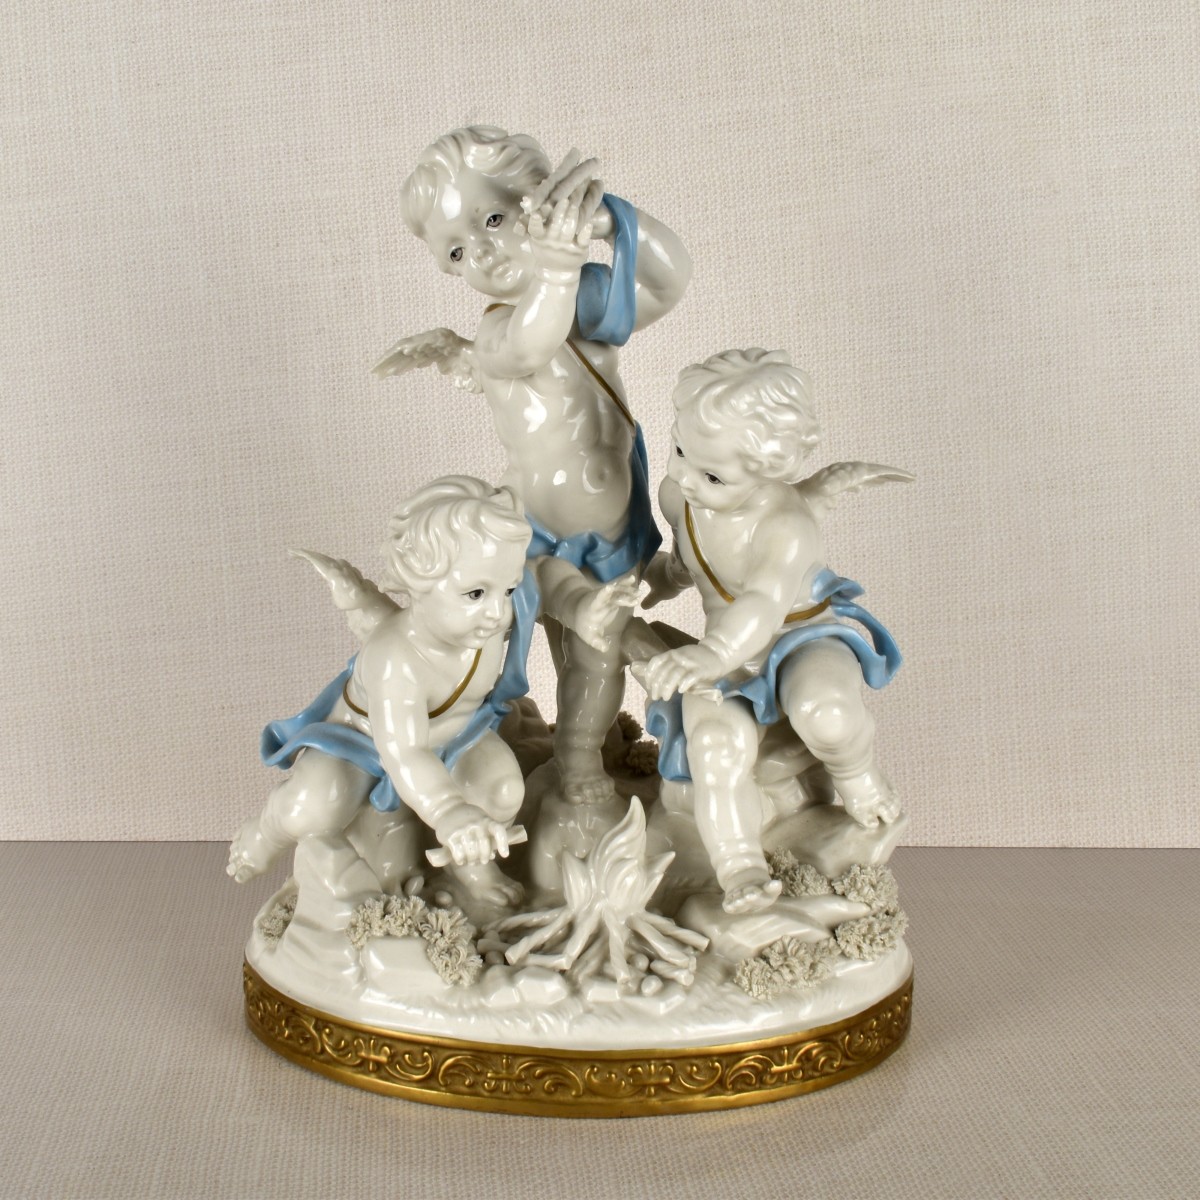 Allegoric Porcelain Figures